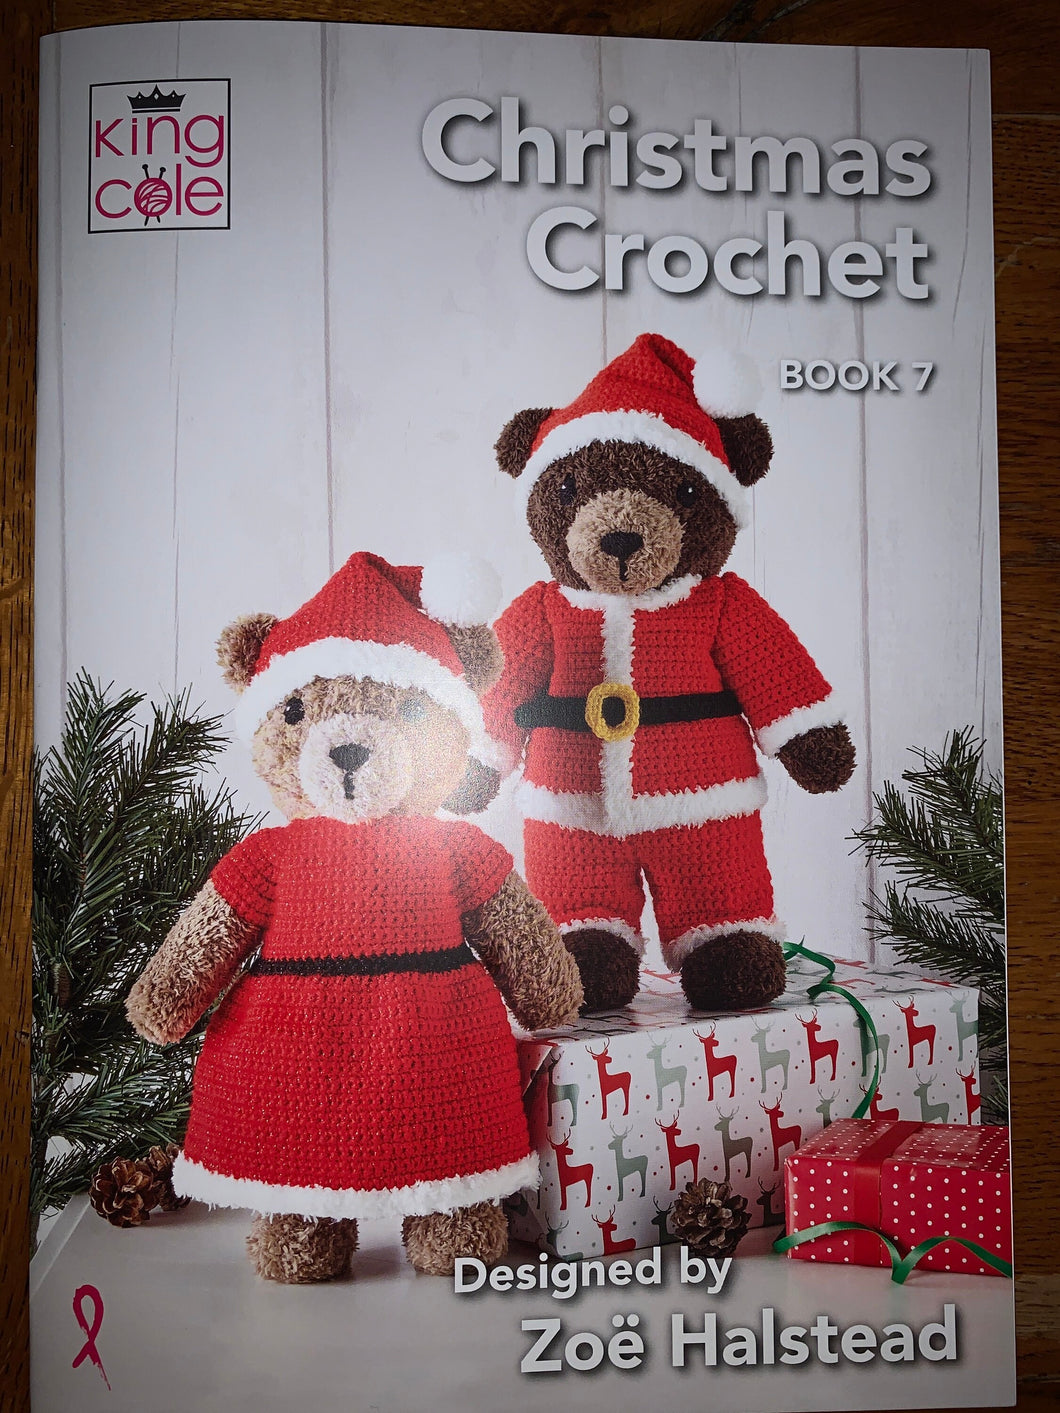 King Cole Christmas Crochet Book 7